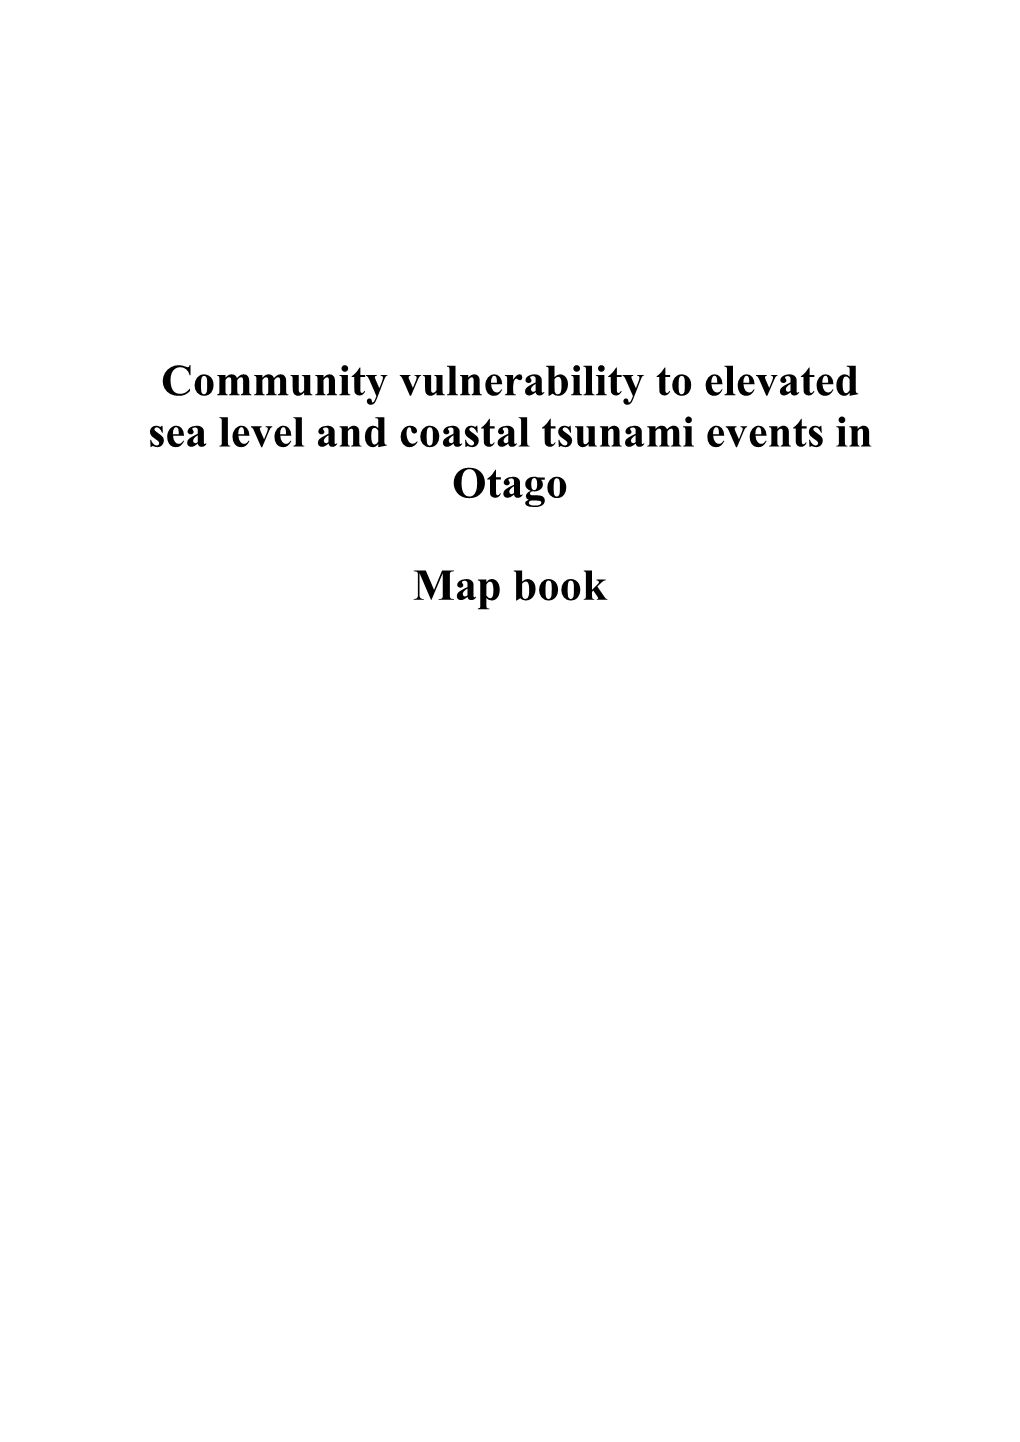 Community Vulnerability to Elevated Sea Level and Coastal Tsunami Events in Otago